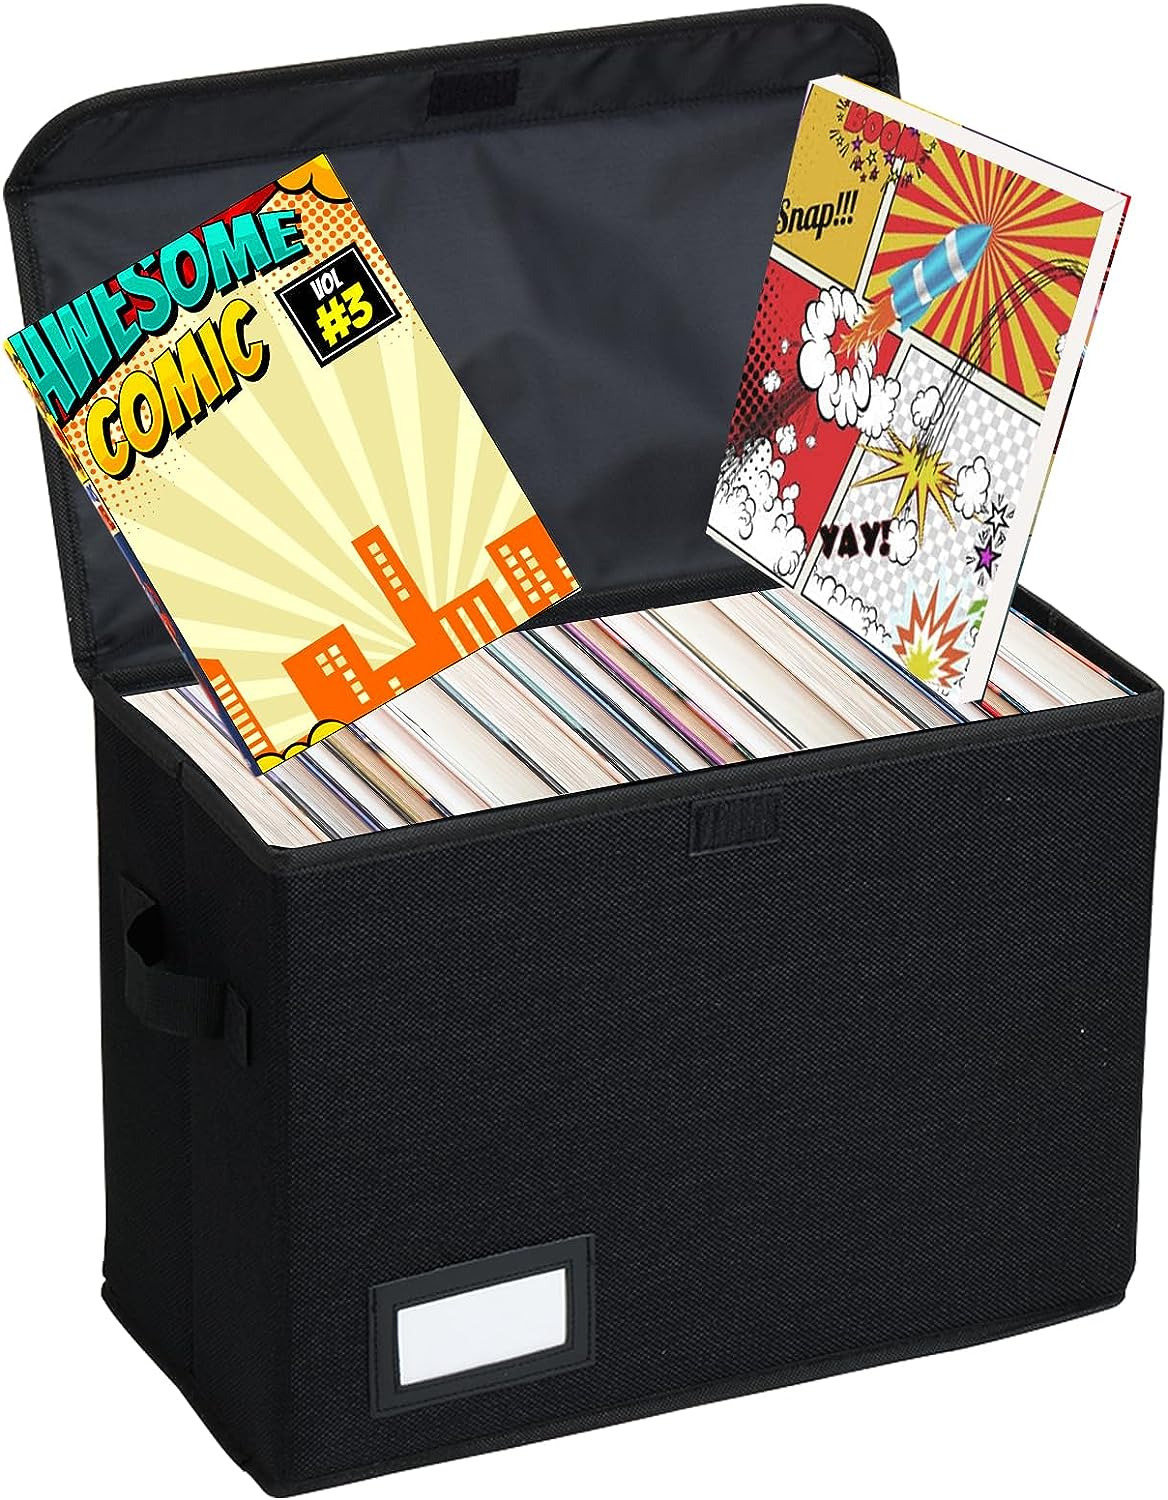 Comic Book Storage Box 1Pcs 15.8 x 7.5 x 11.4 Inches Collapsible Comic